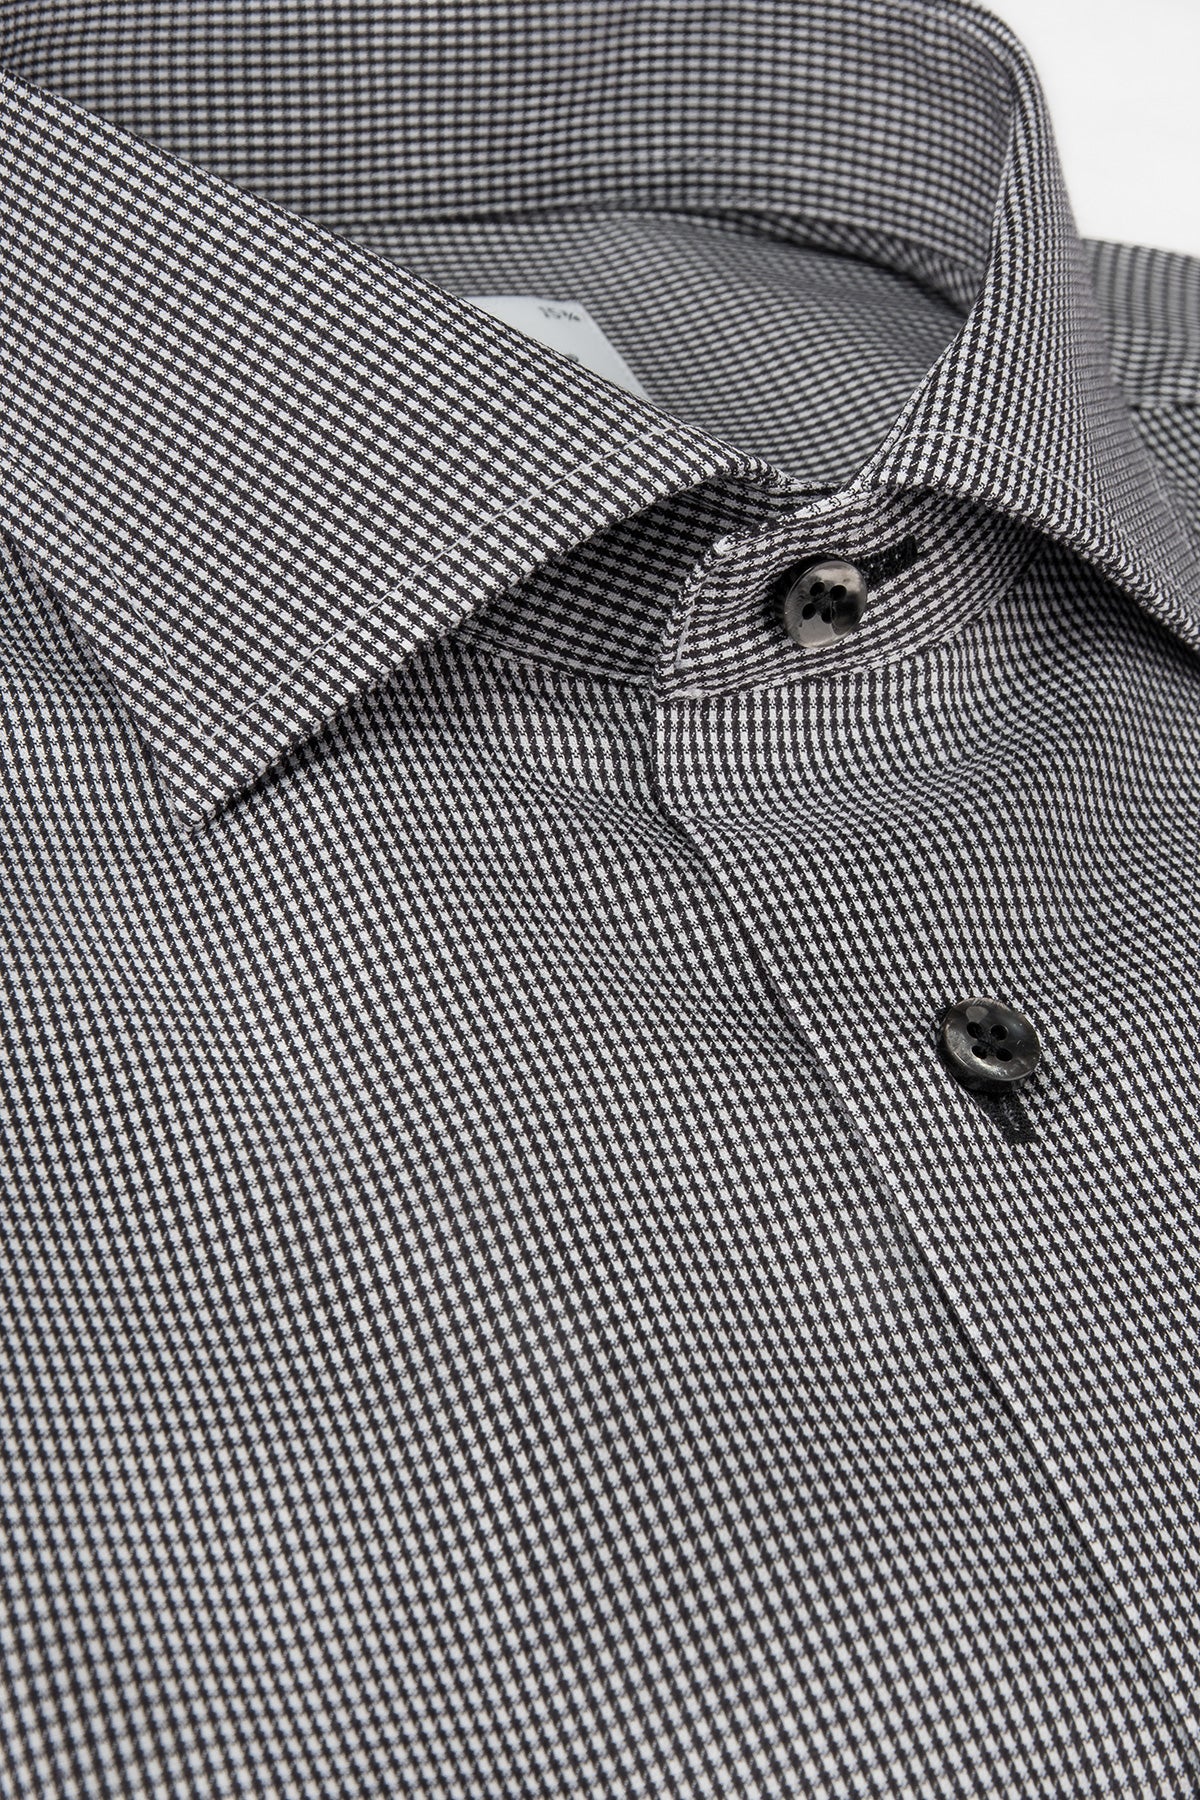 Grey checked regular fit shirt